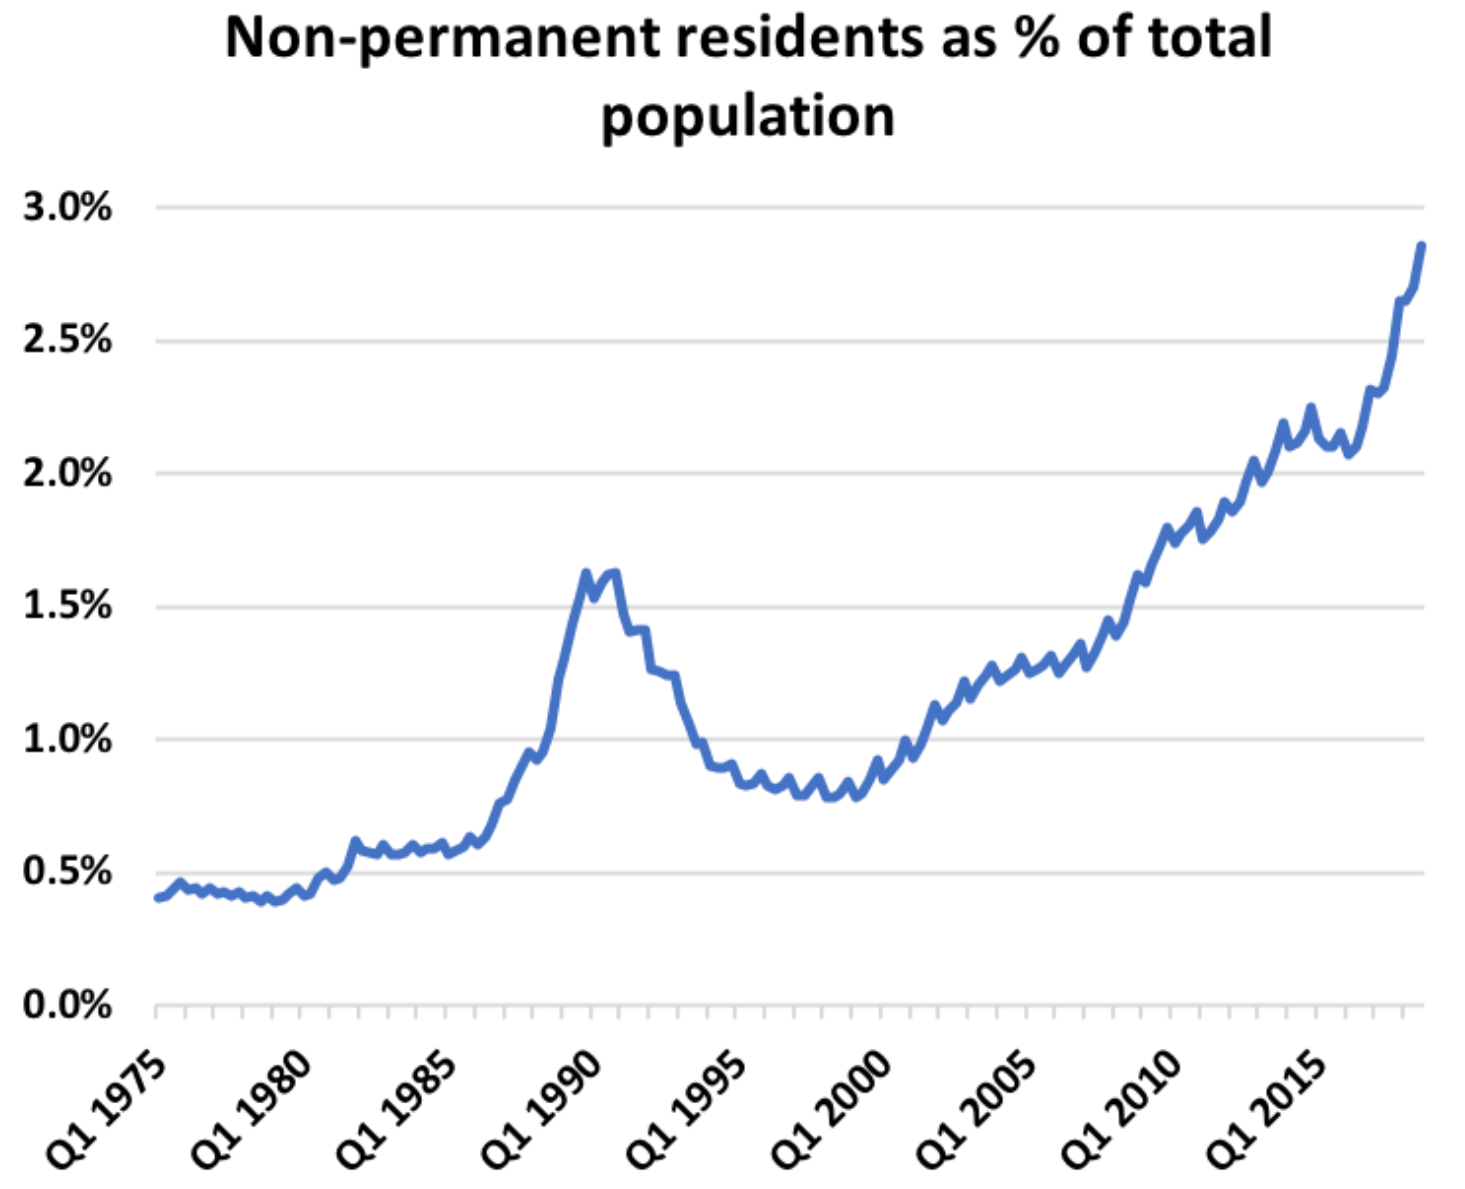 Non-permanent resident migration